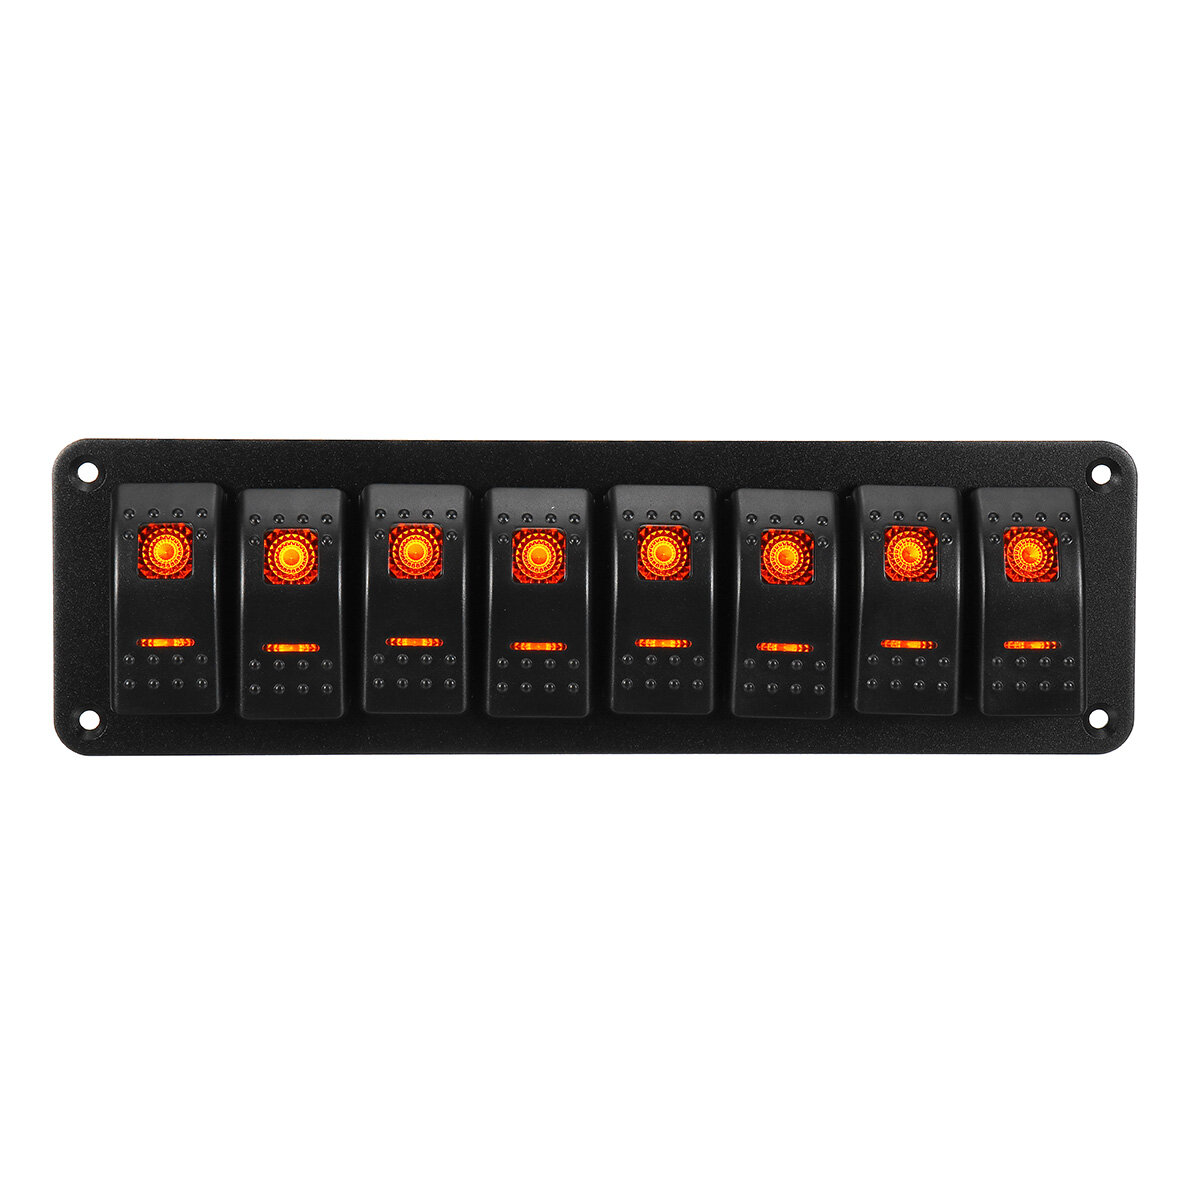 8 Gang LED Rocker Switch Panel Breaker Waterdicht Voor Auto Marine Boot